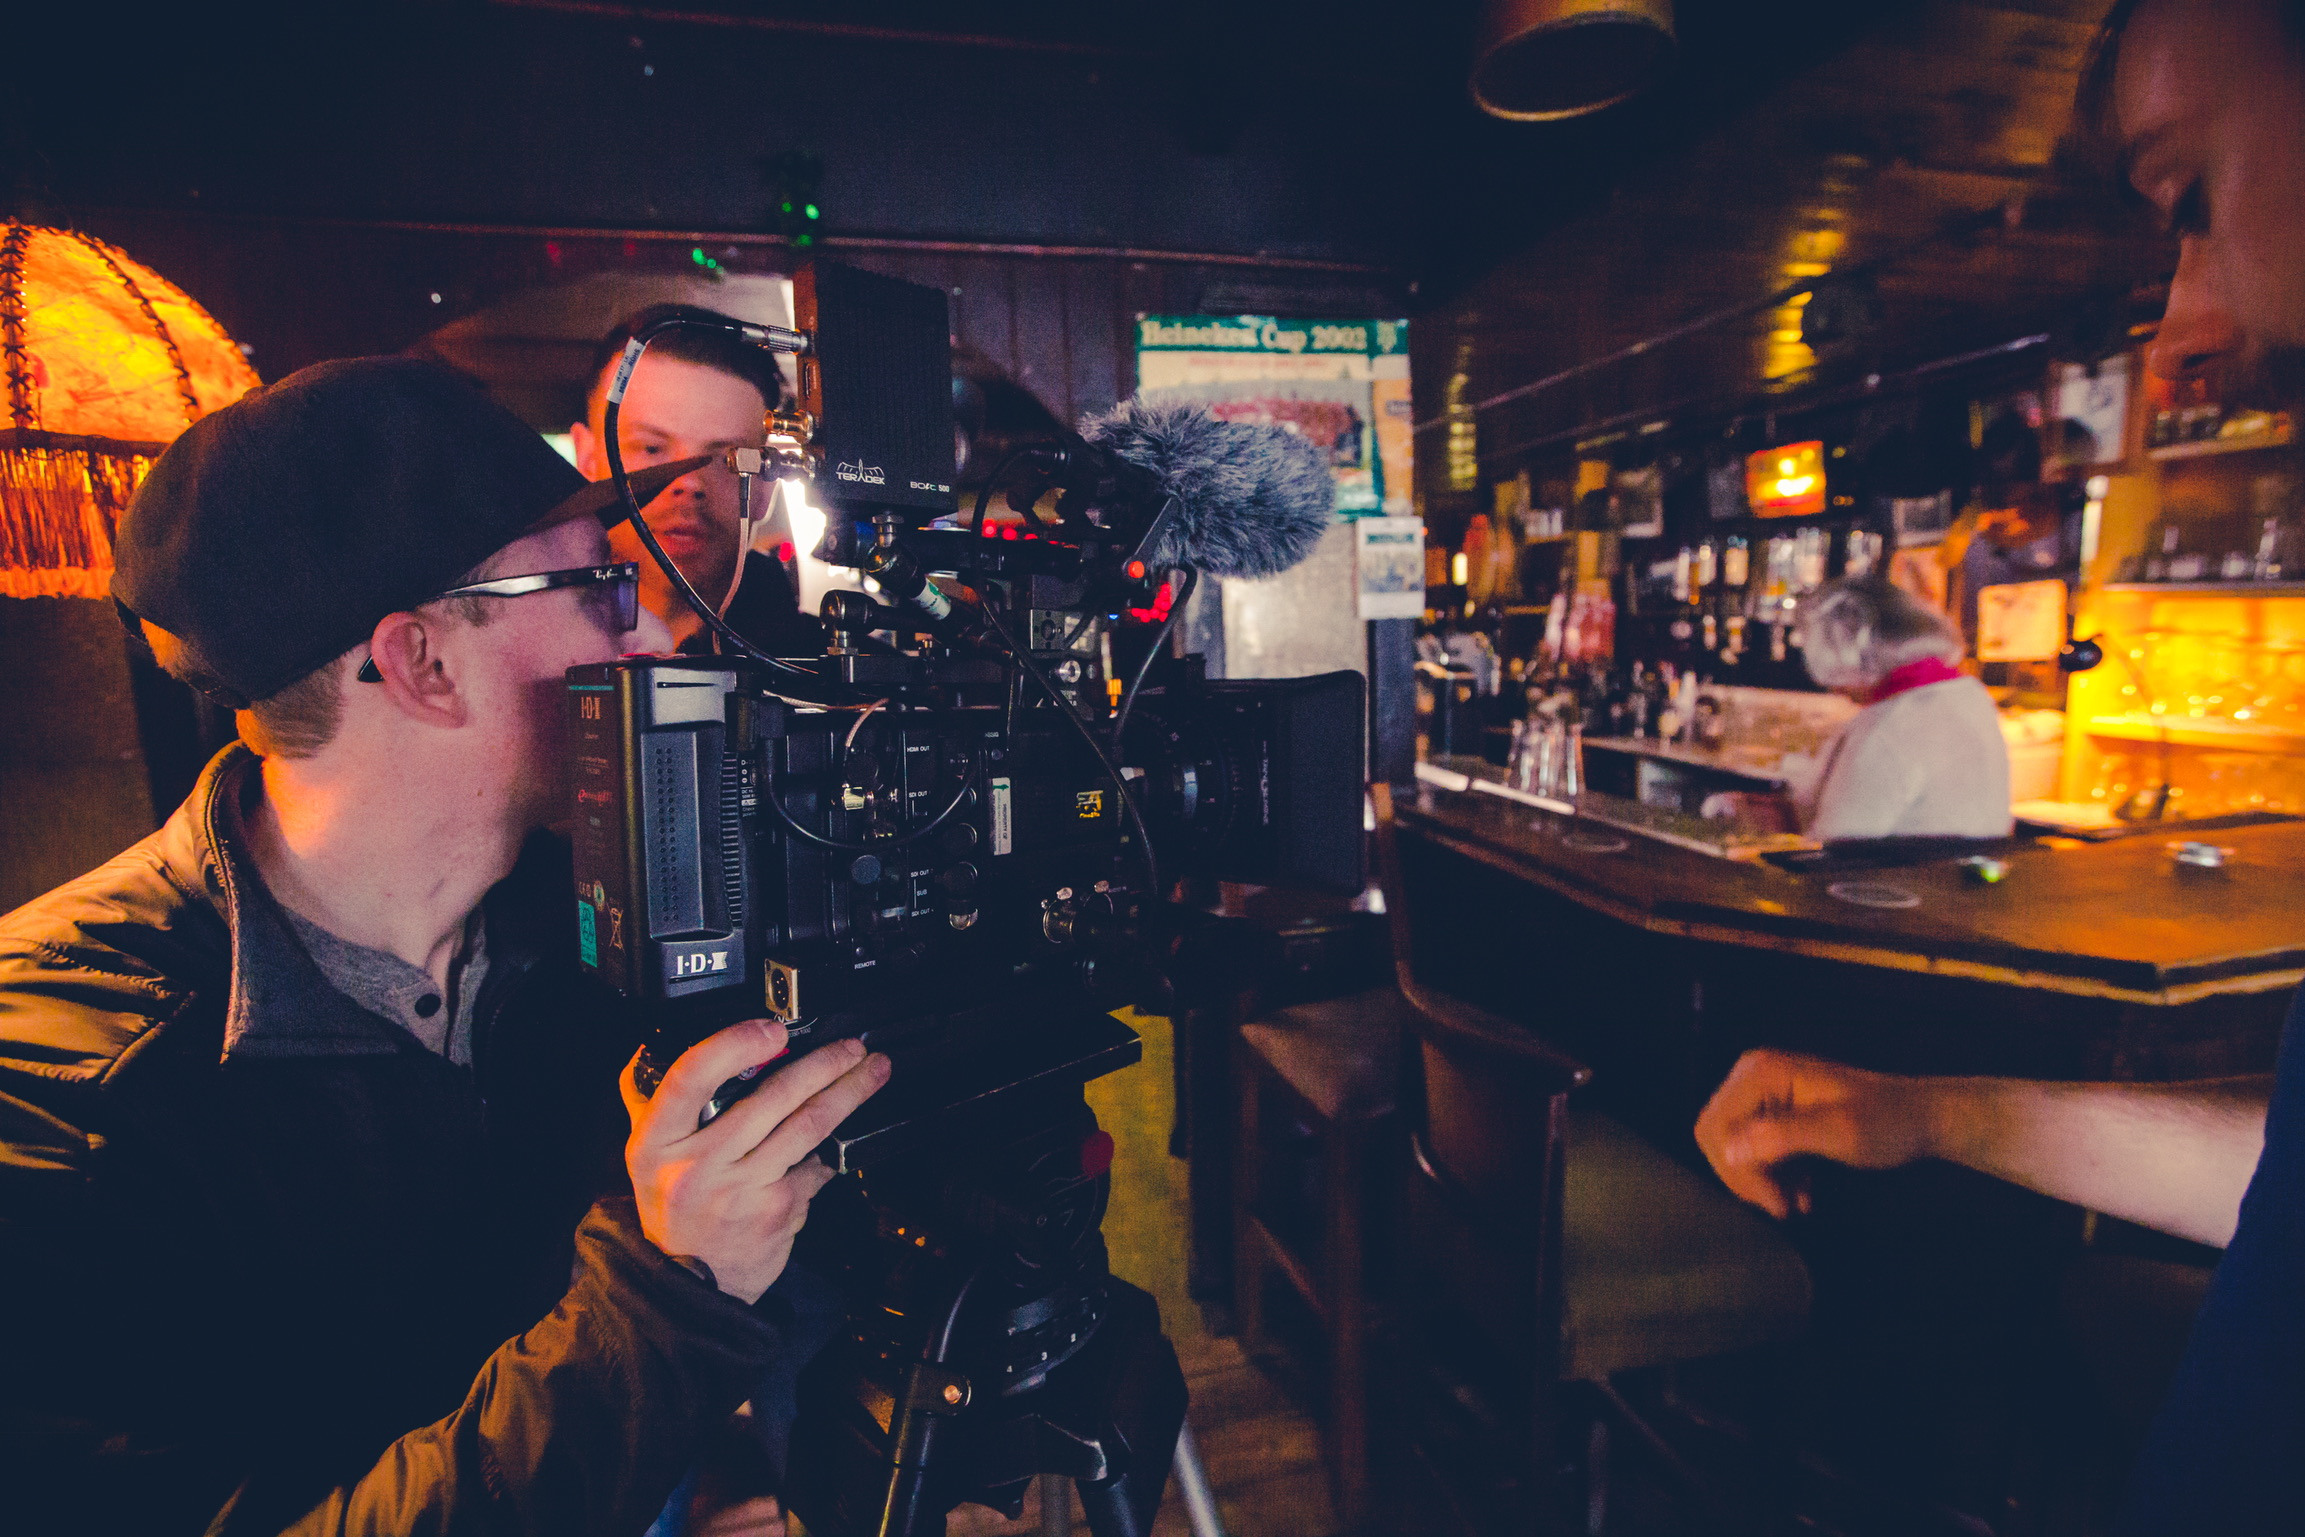 Filming in pub